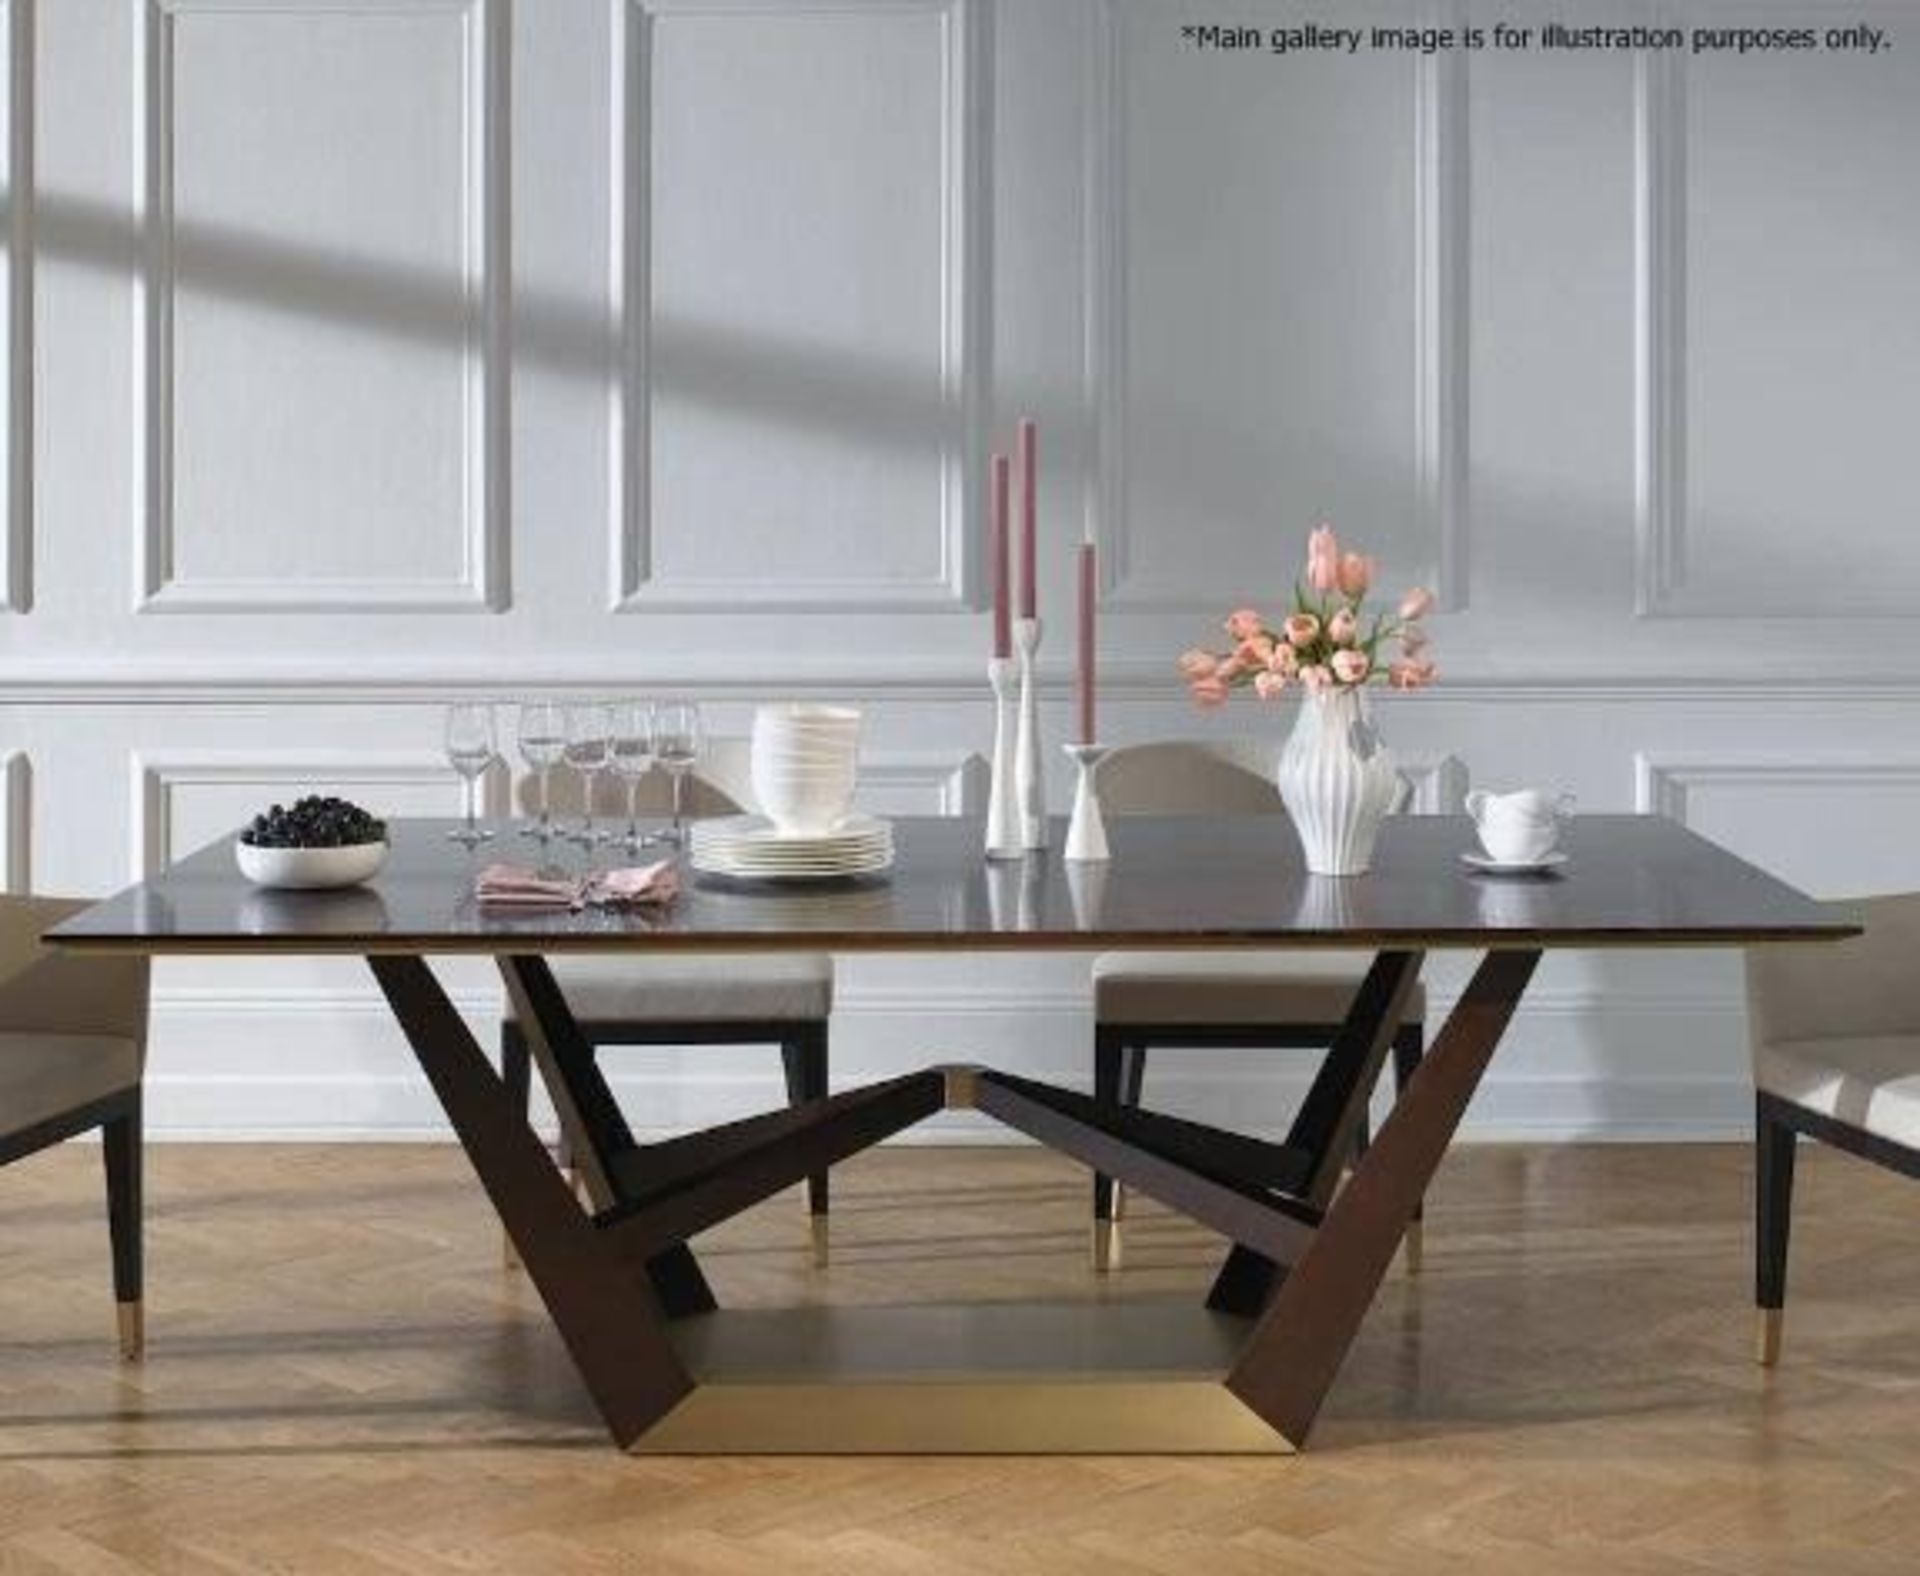 1 x PORADA Ellington Dining Table - 2.2 Metres In Length - Original RRP £7,495